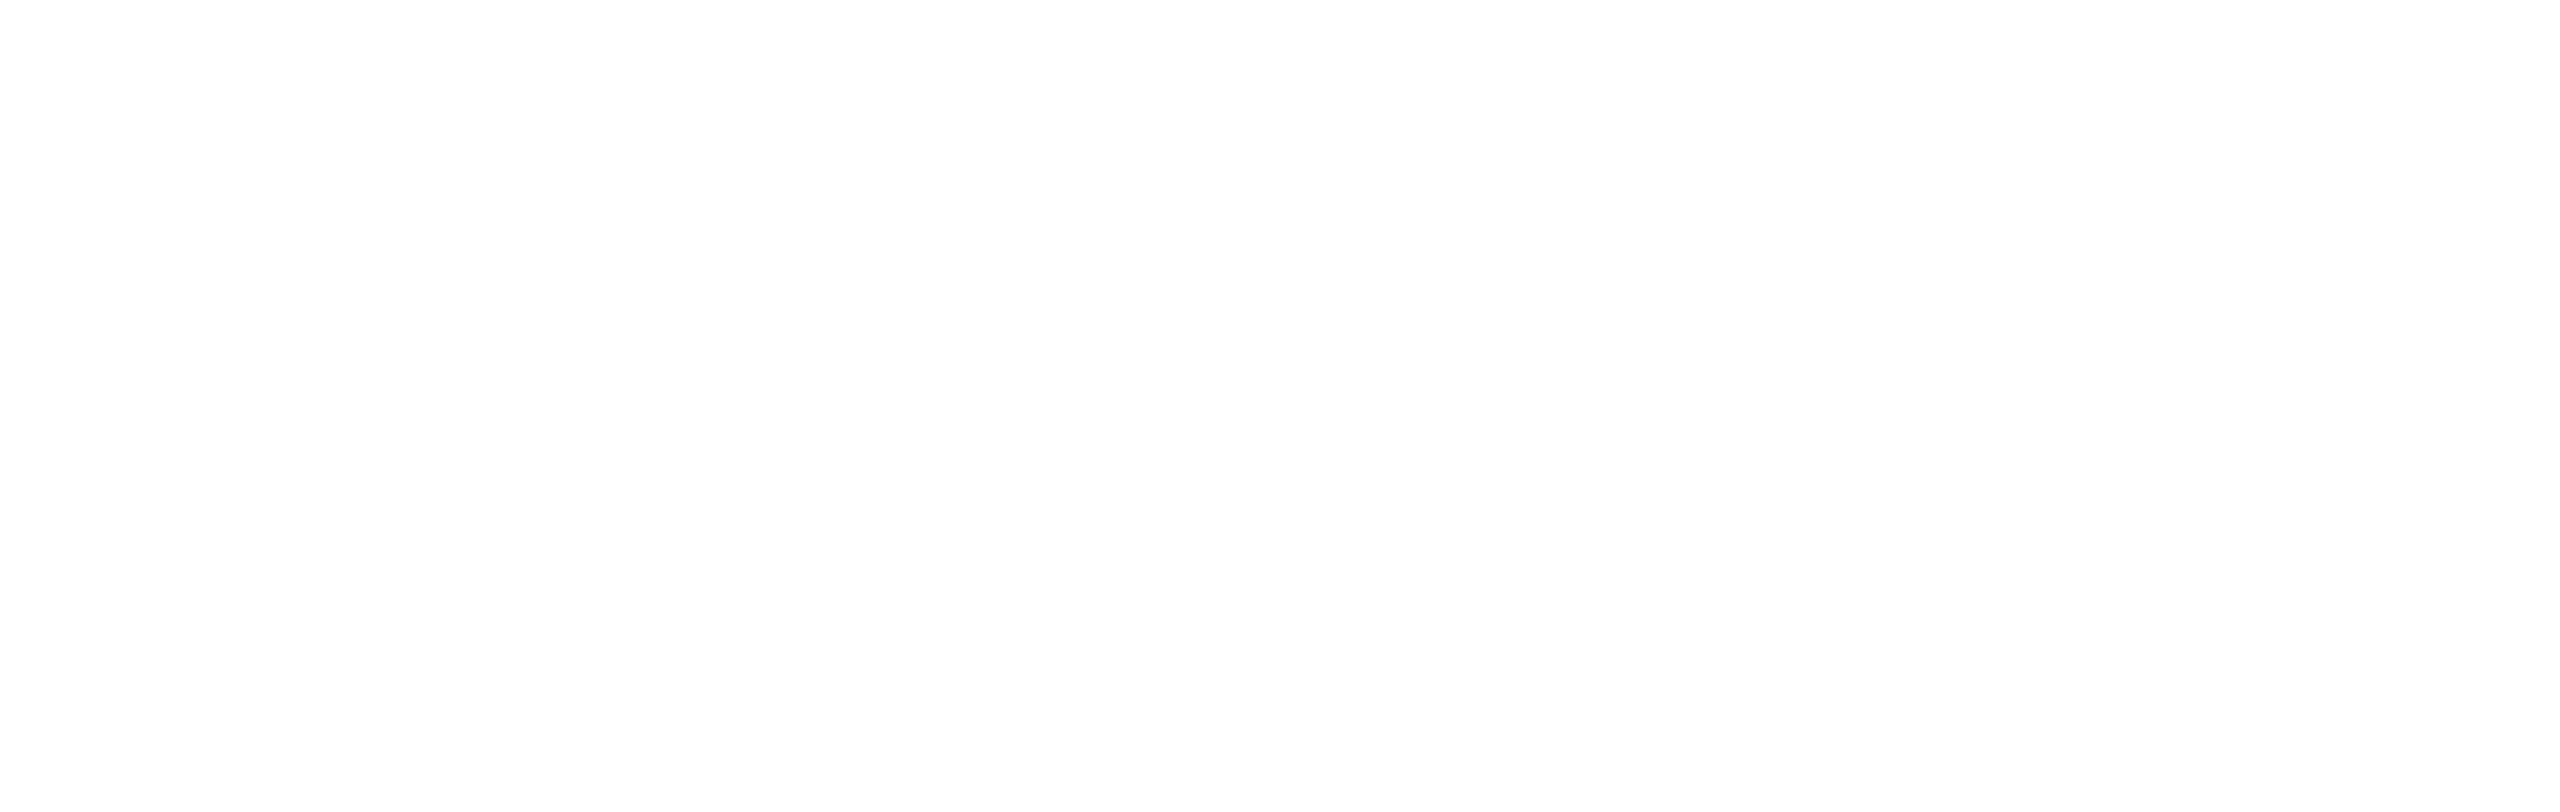 amz hackers logo pfade x weiss quer